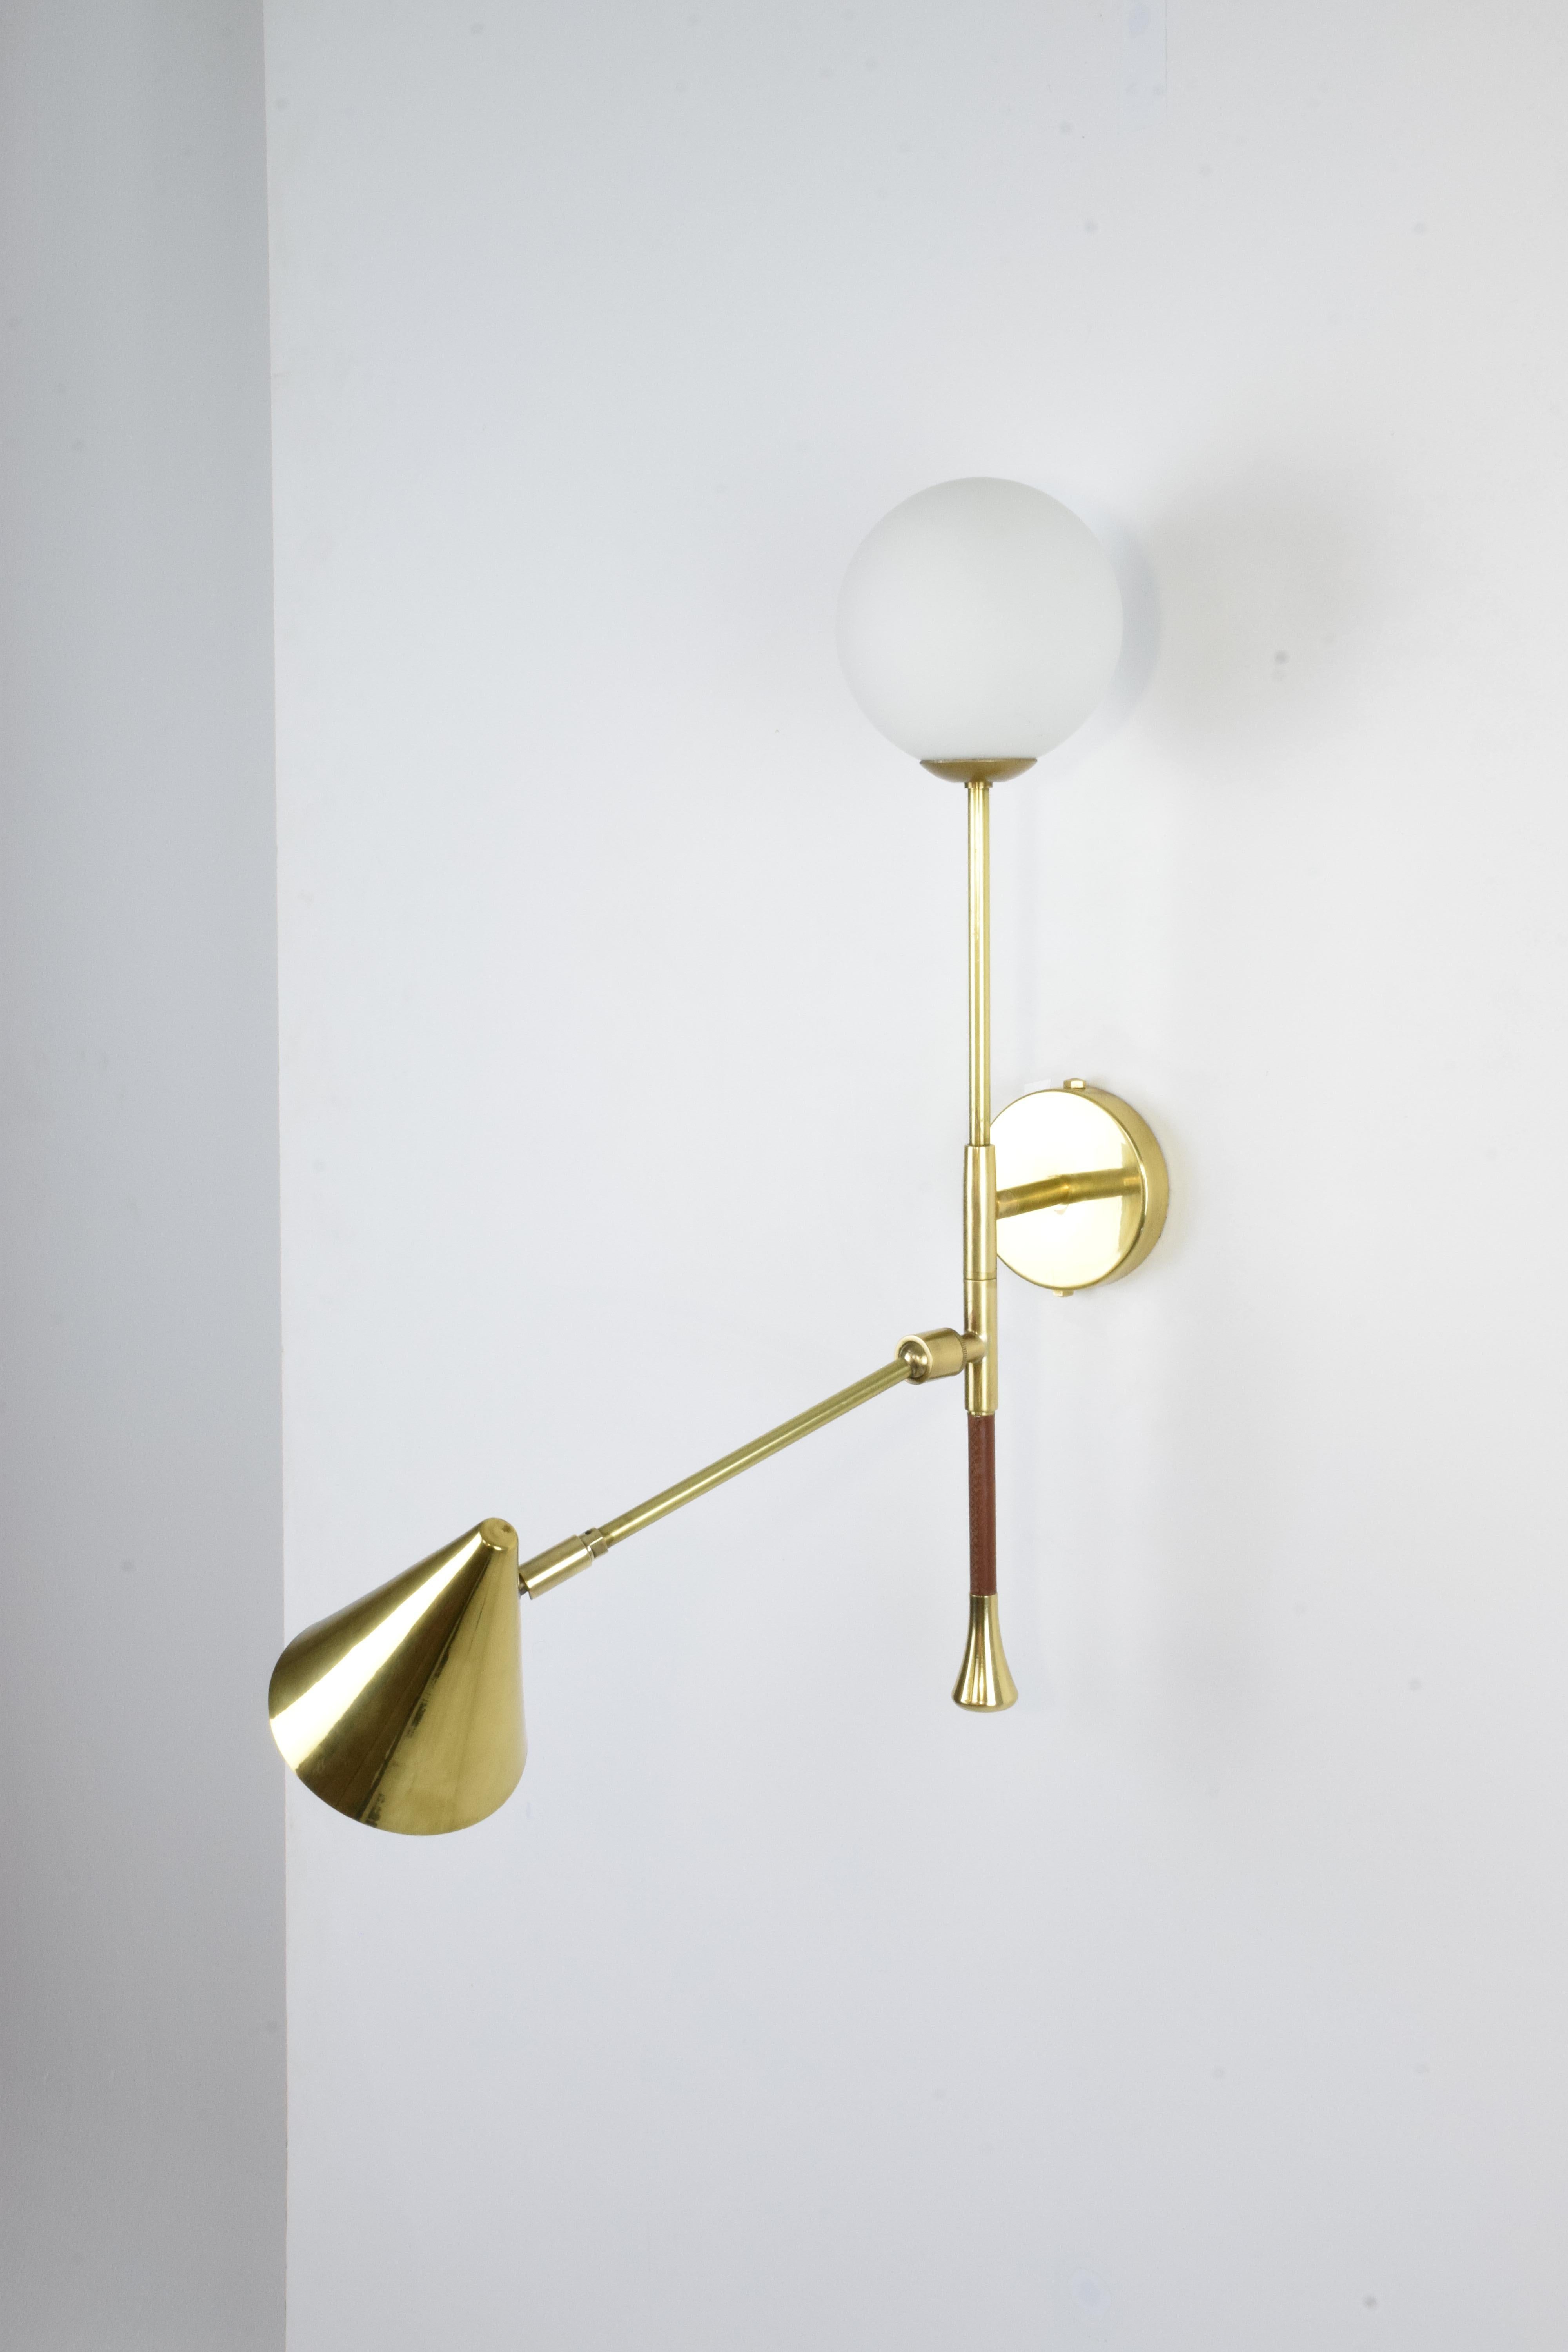 De.Light W1 Contemporary Brass Articulating Double Wall Light, Flow Collection 11